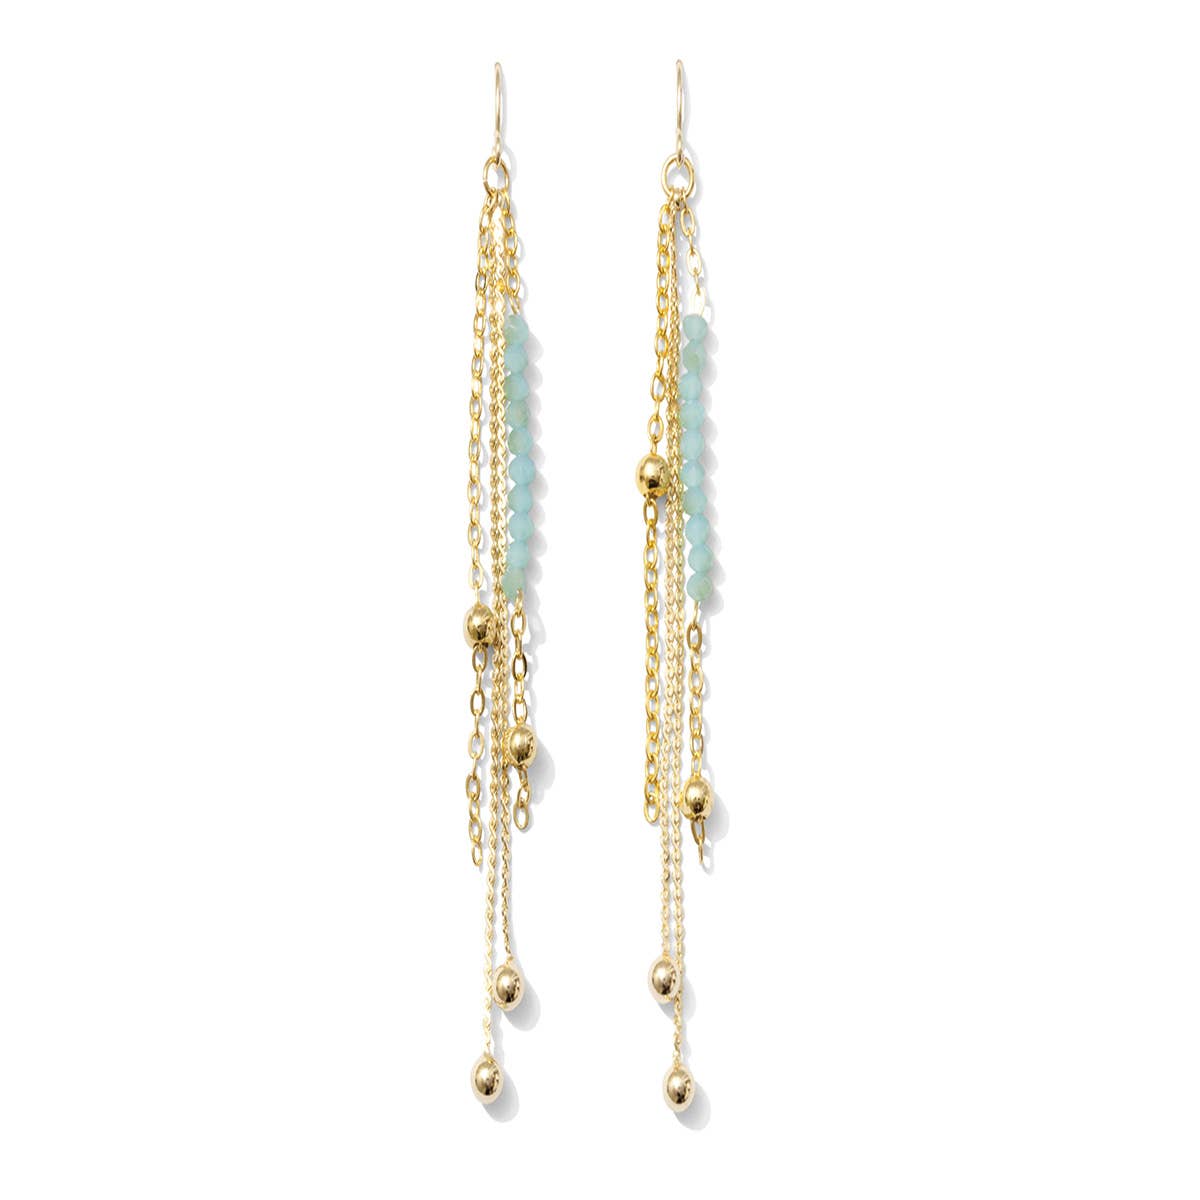 Gold & Aqua Long Earring with a Pop of Color - Rose Grace Boutique 